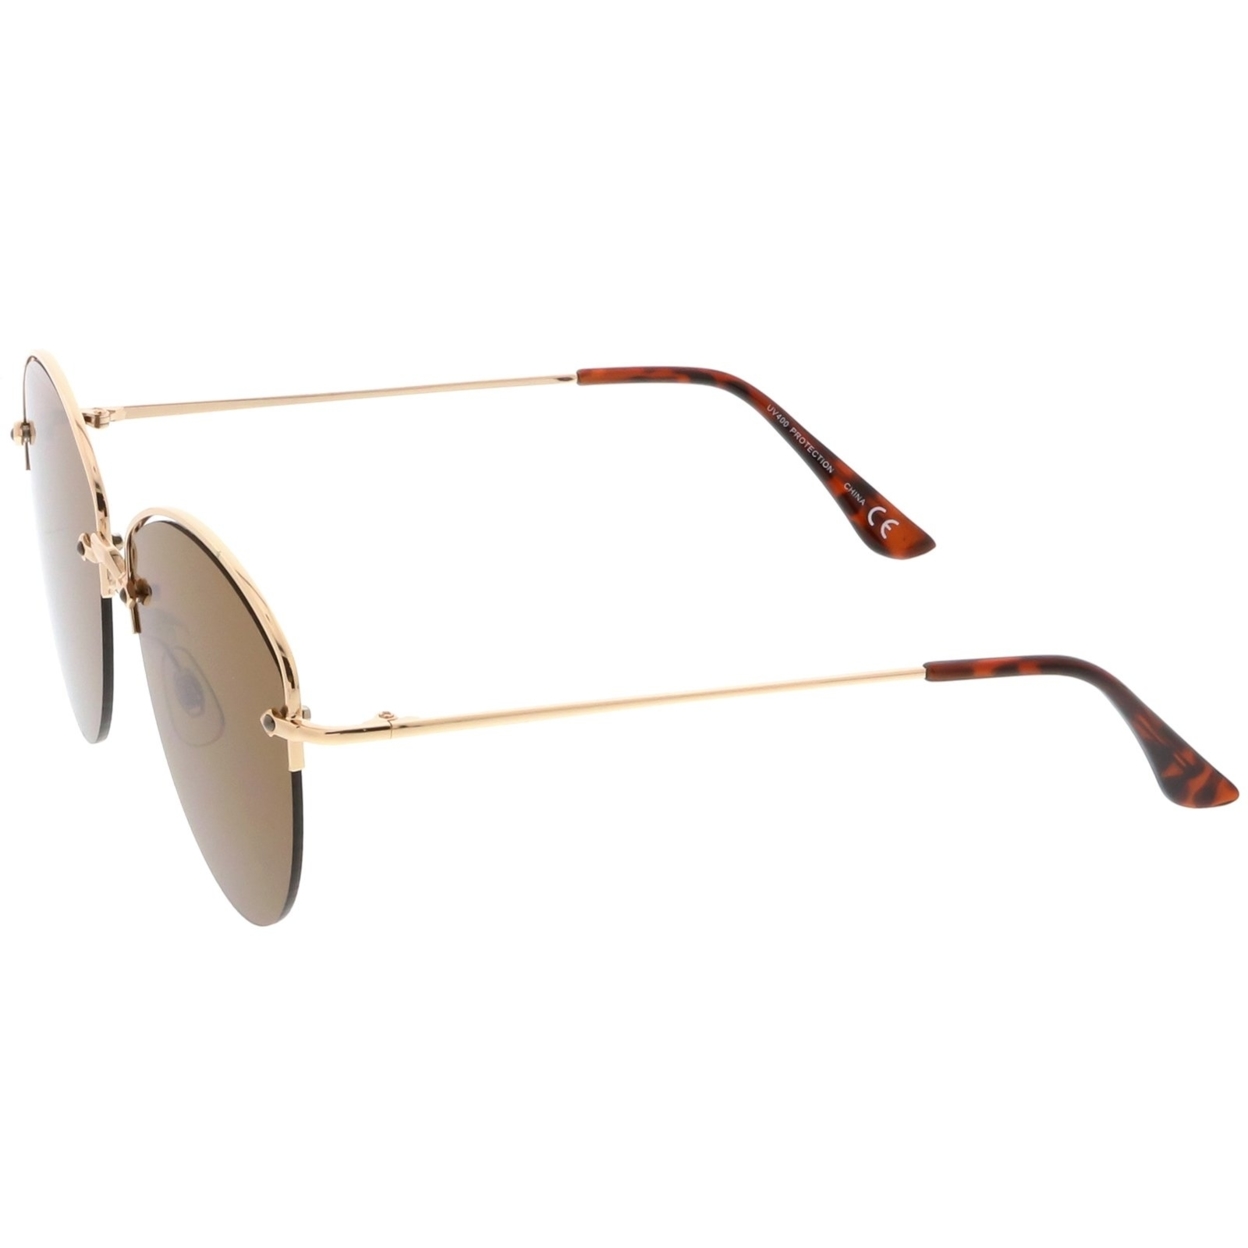 Modern Metal Nose Bridge Flat Lens Semi-Rimless Sunglasses 60mm - Gold / Brown